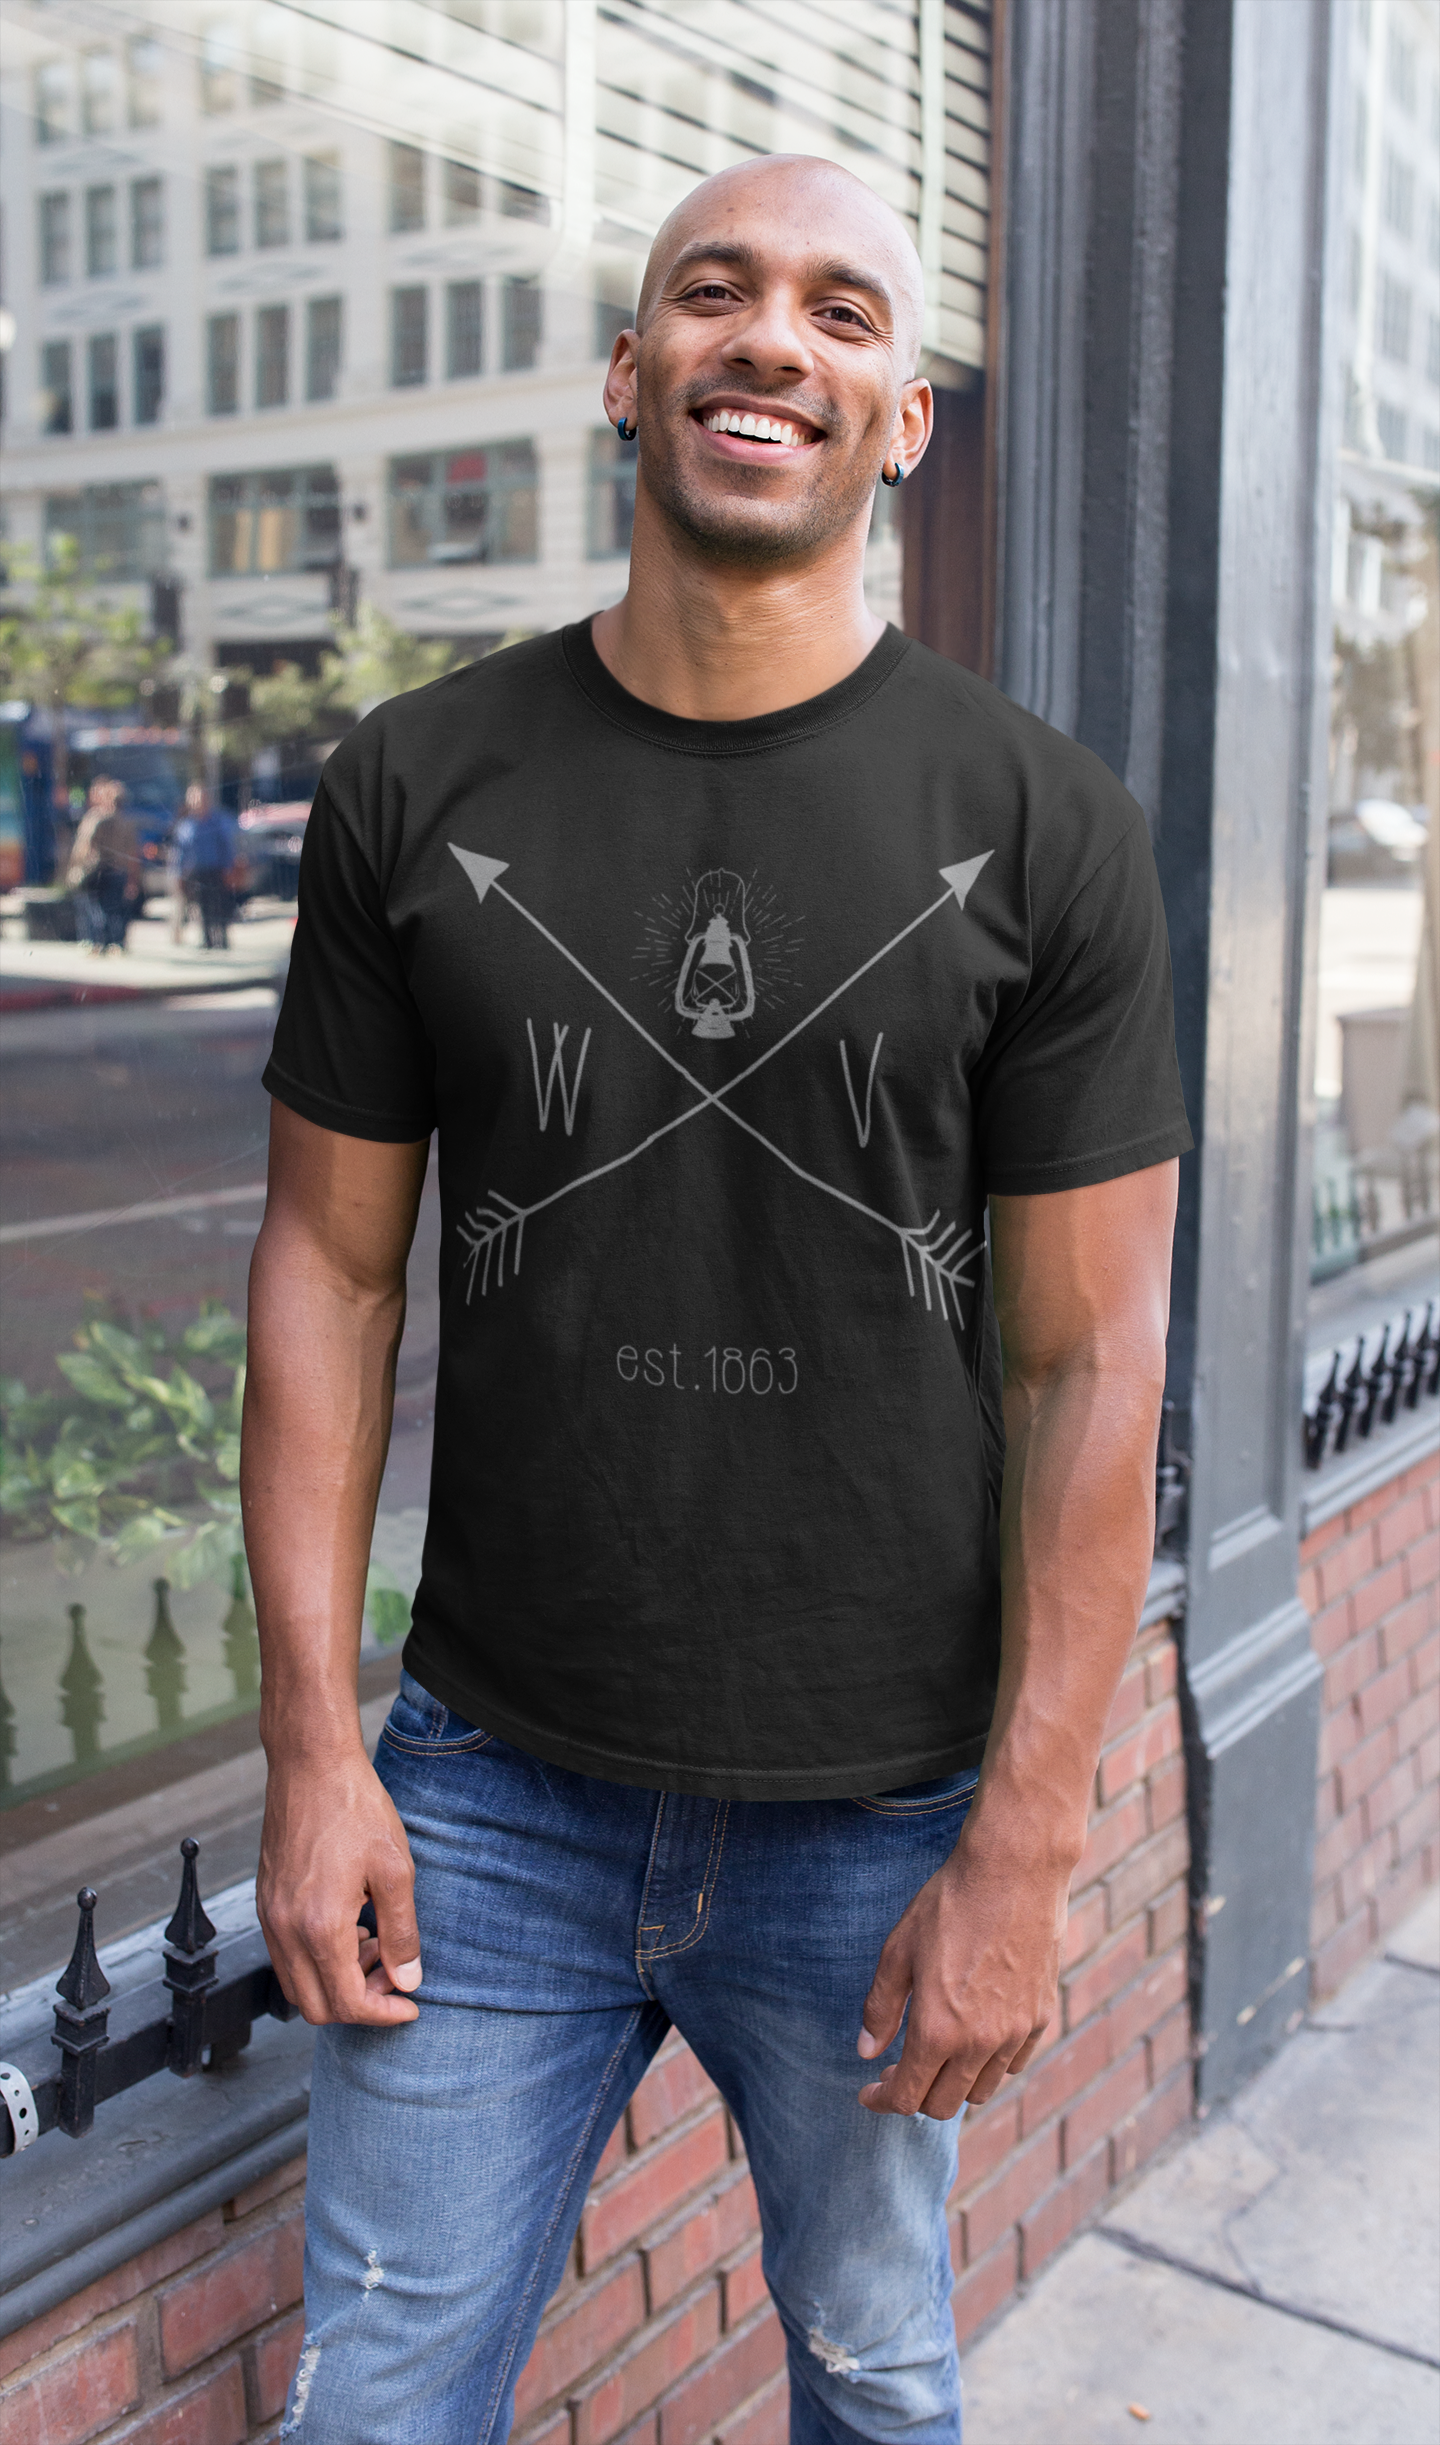 WV Crossed Arrow Shirt